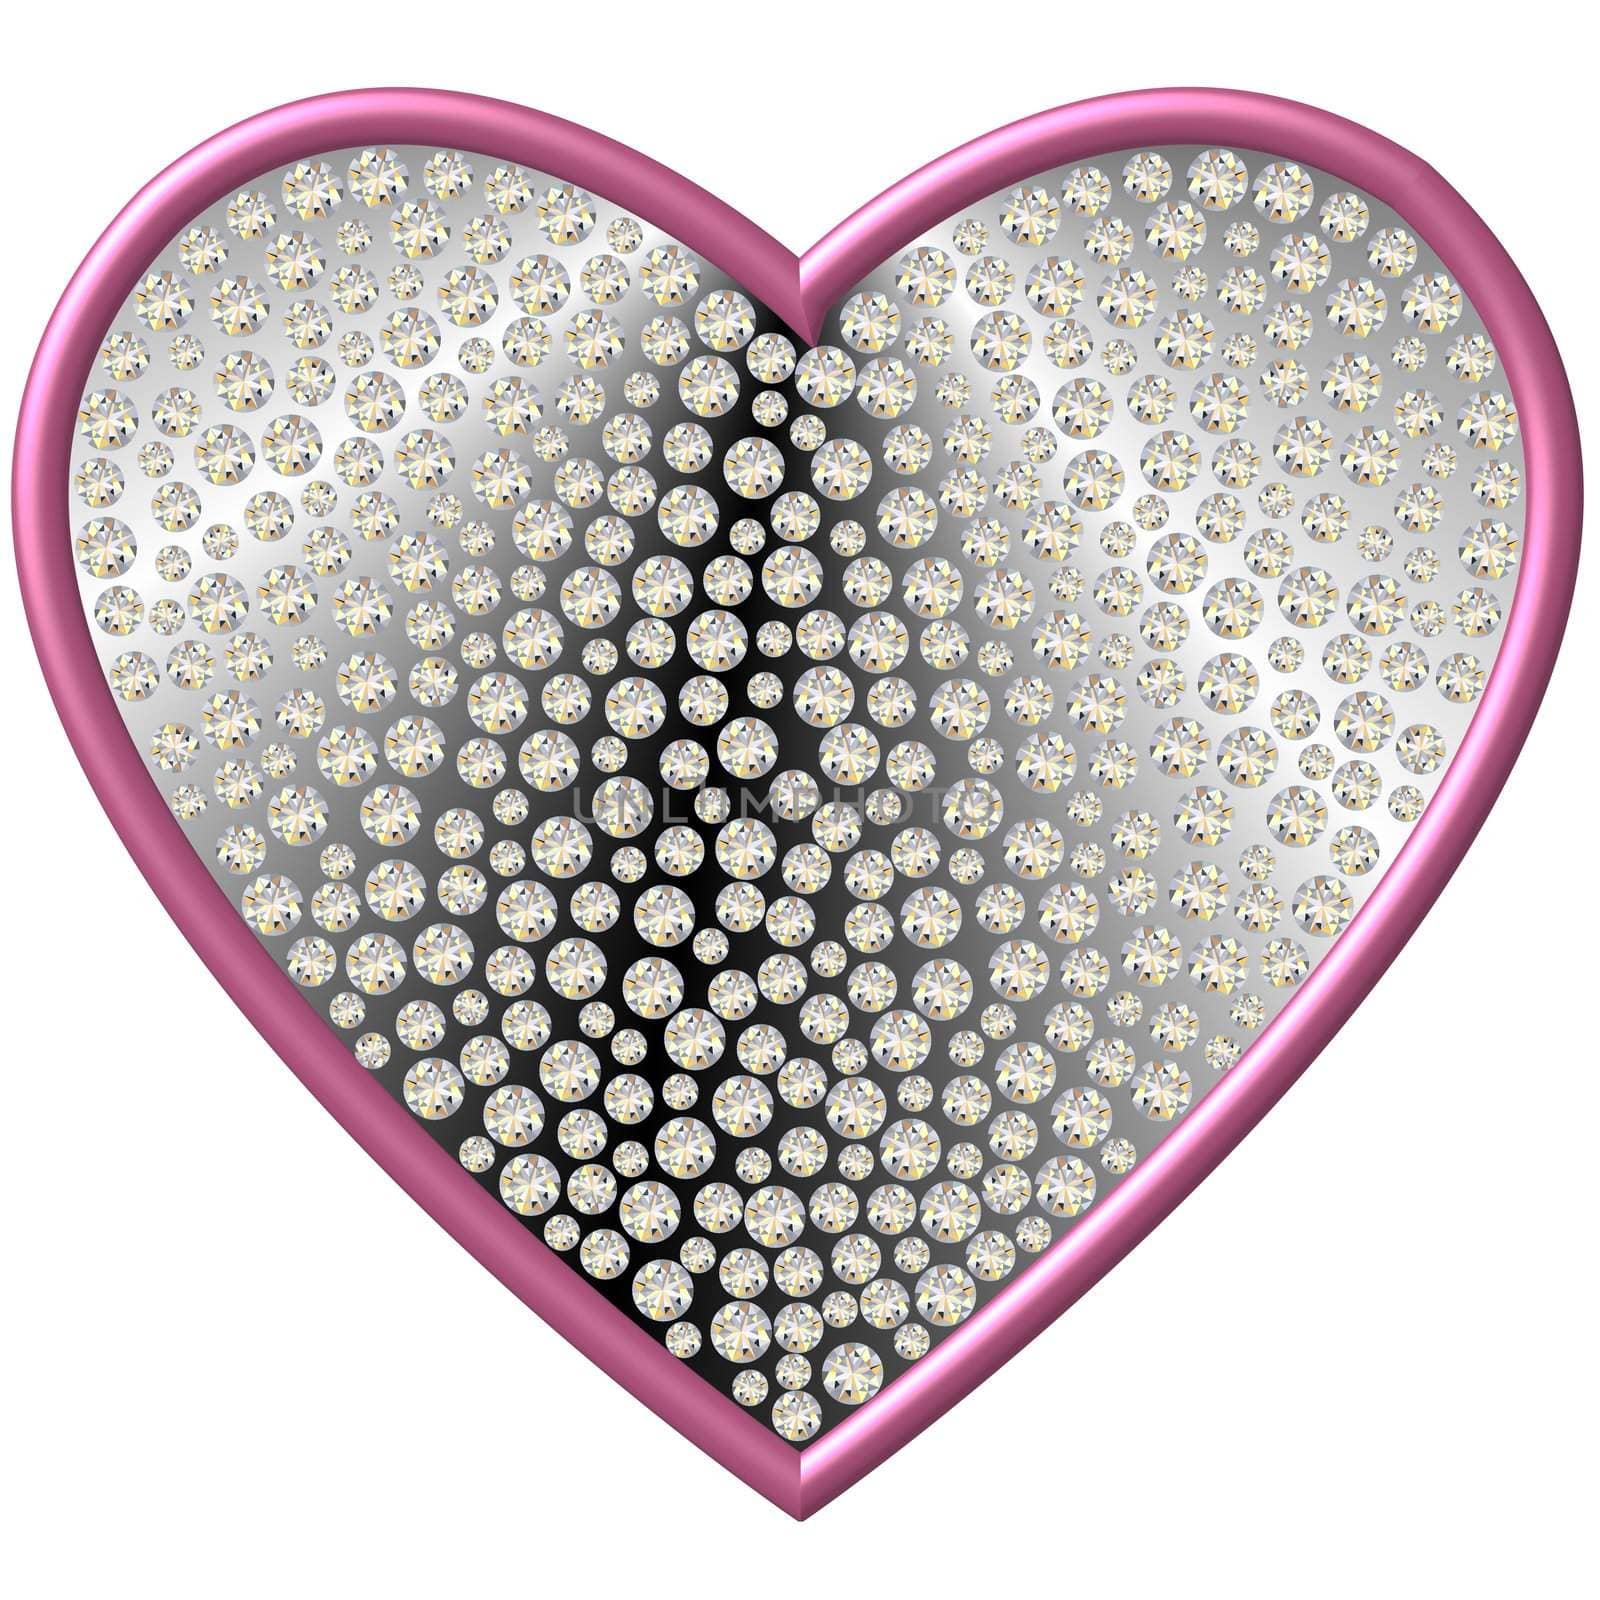 Diamond Symbol Heart by peromarketing